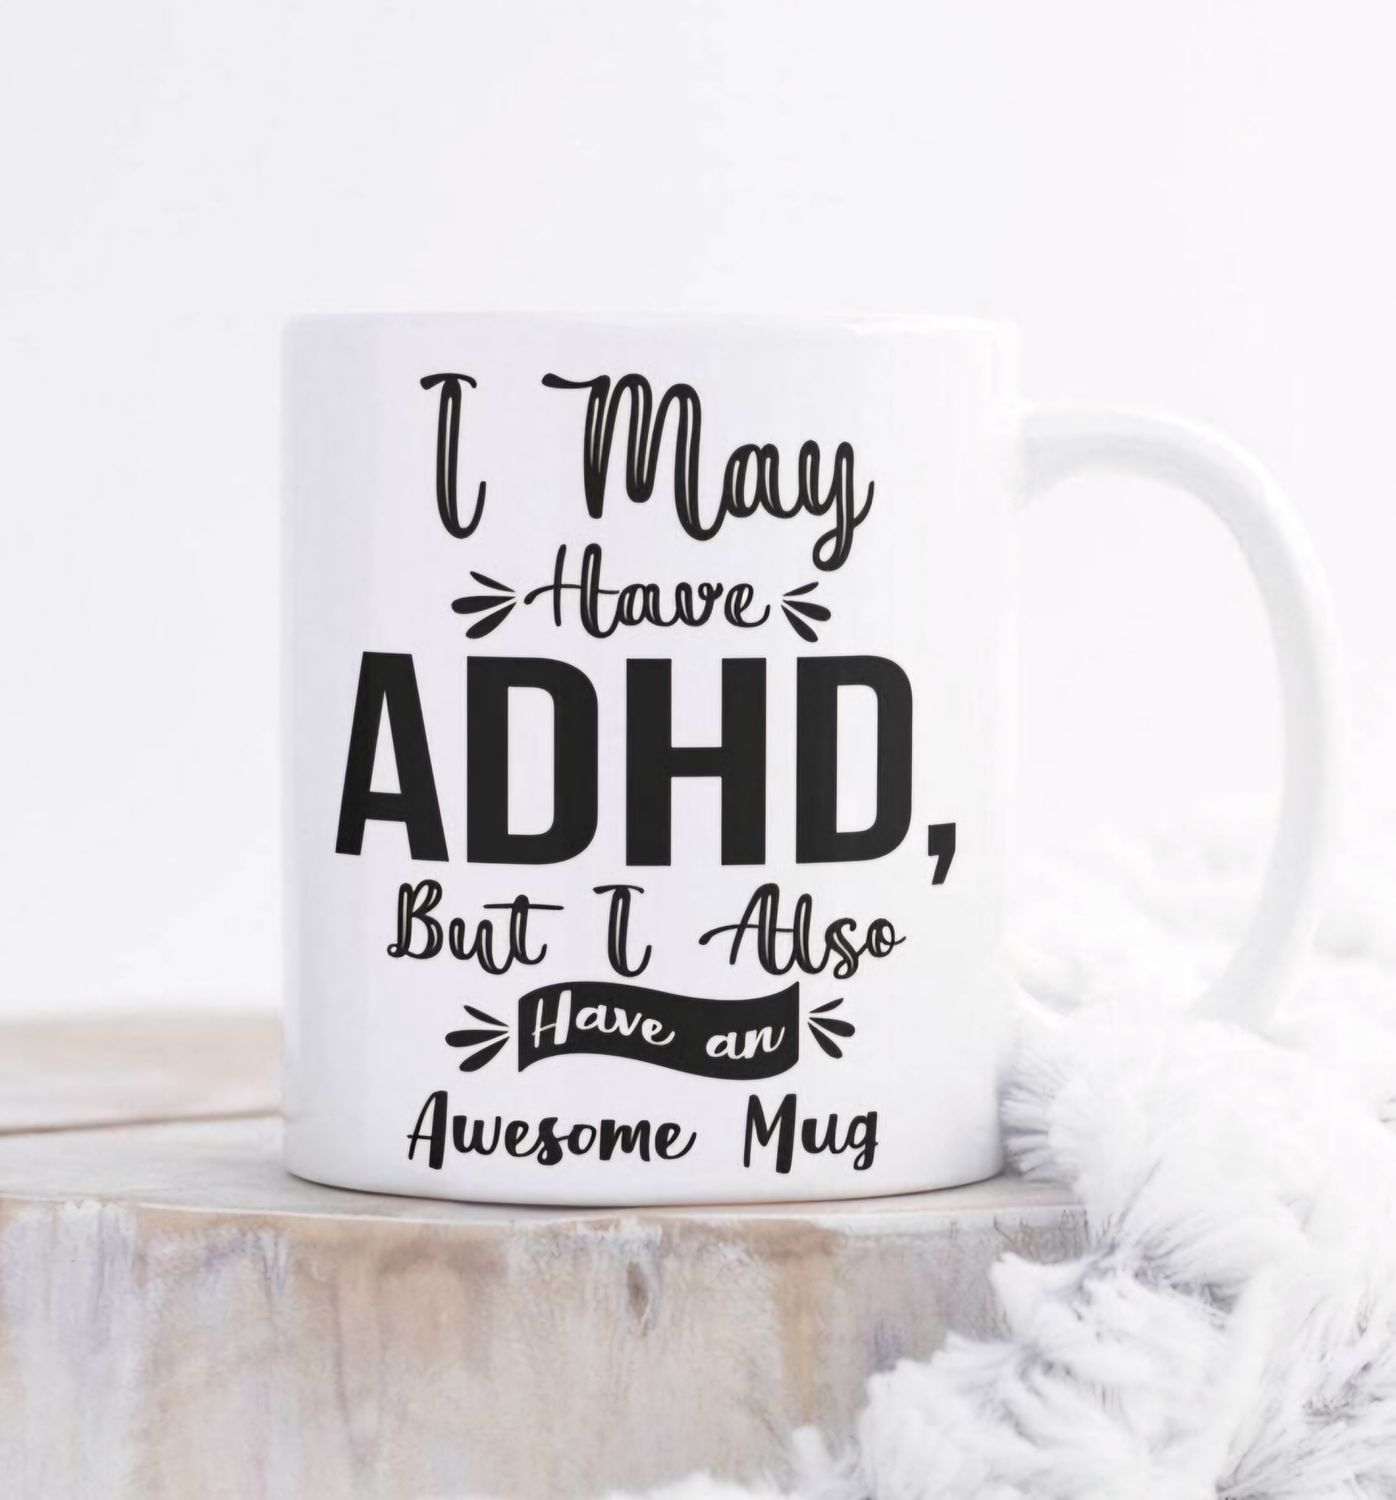 ADHD awesome mug